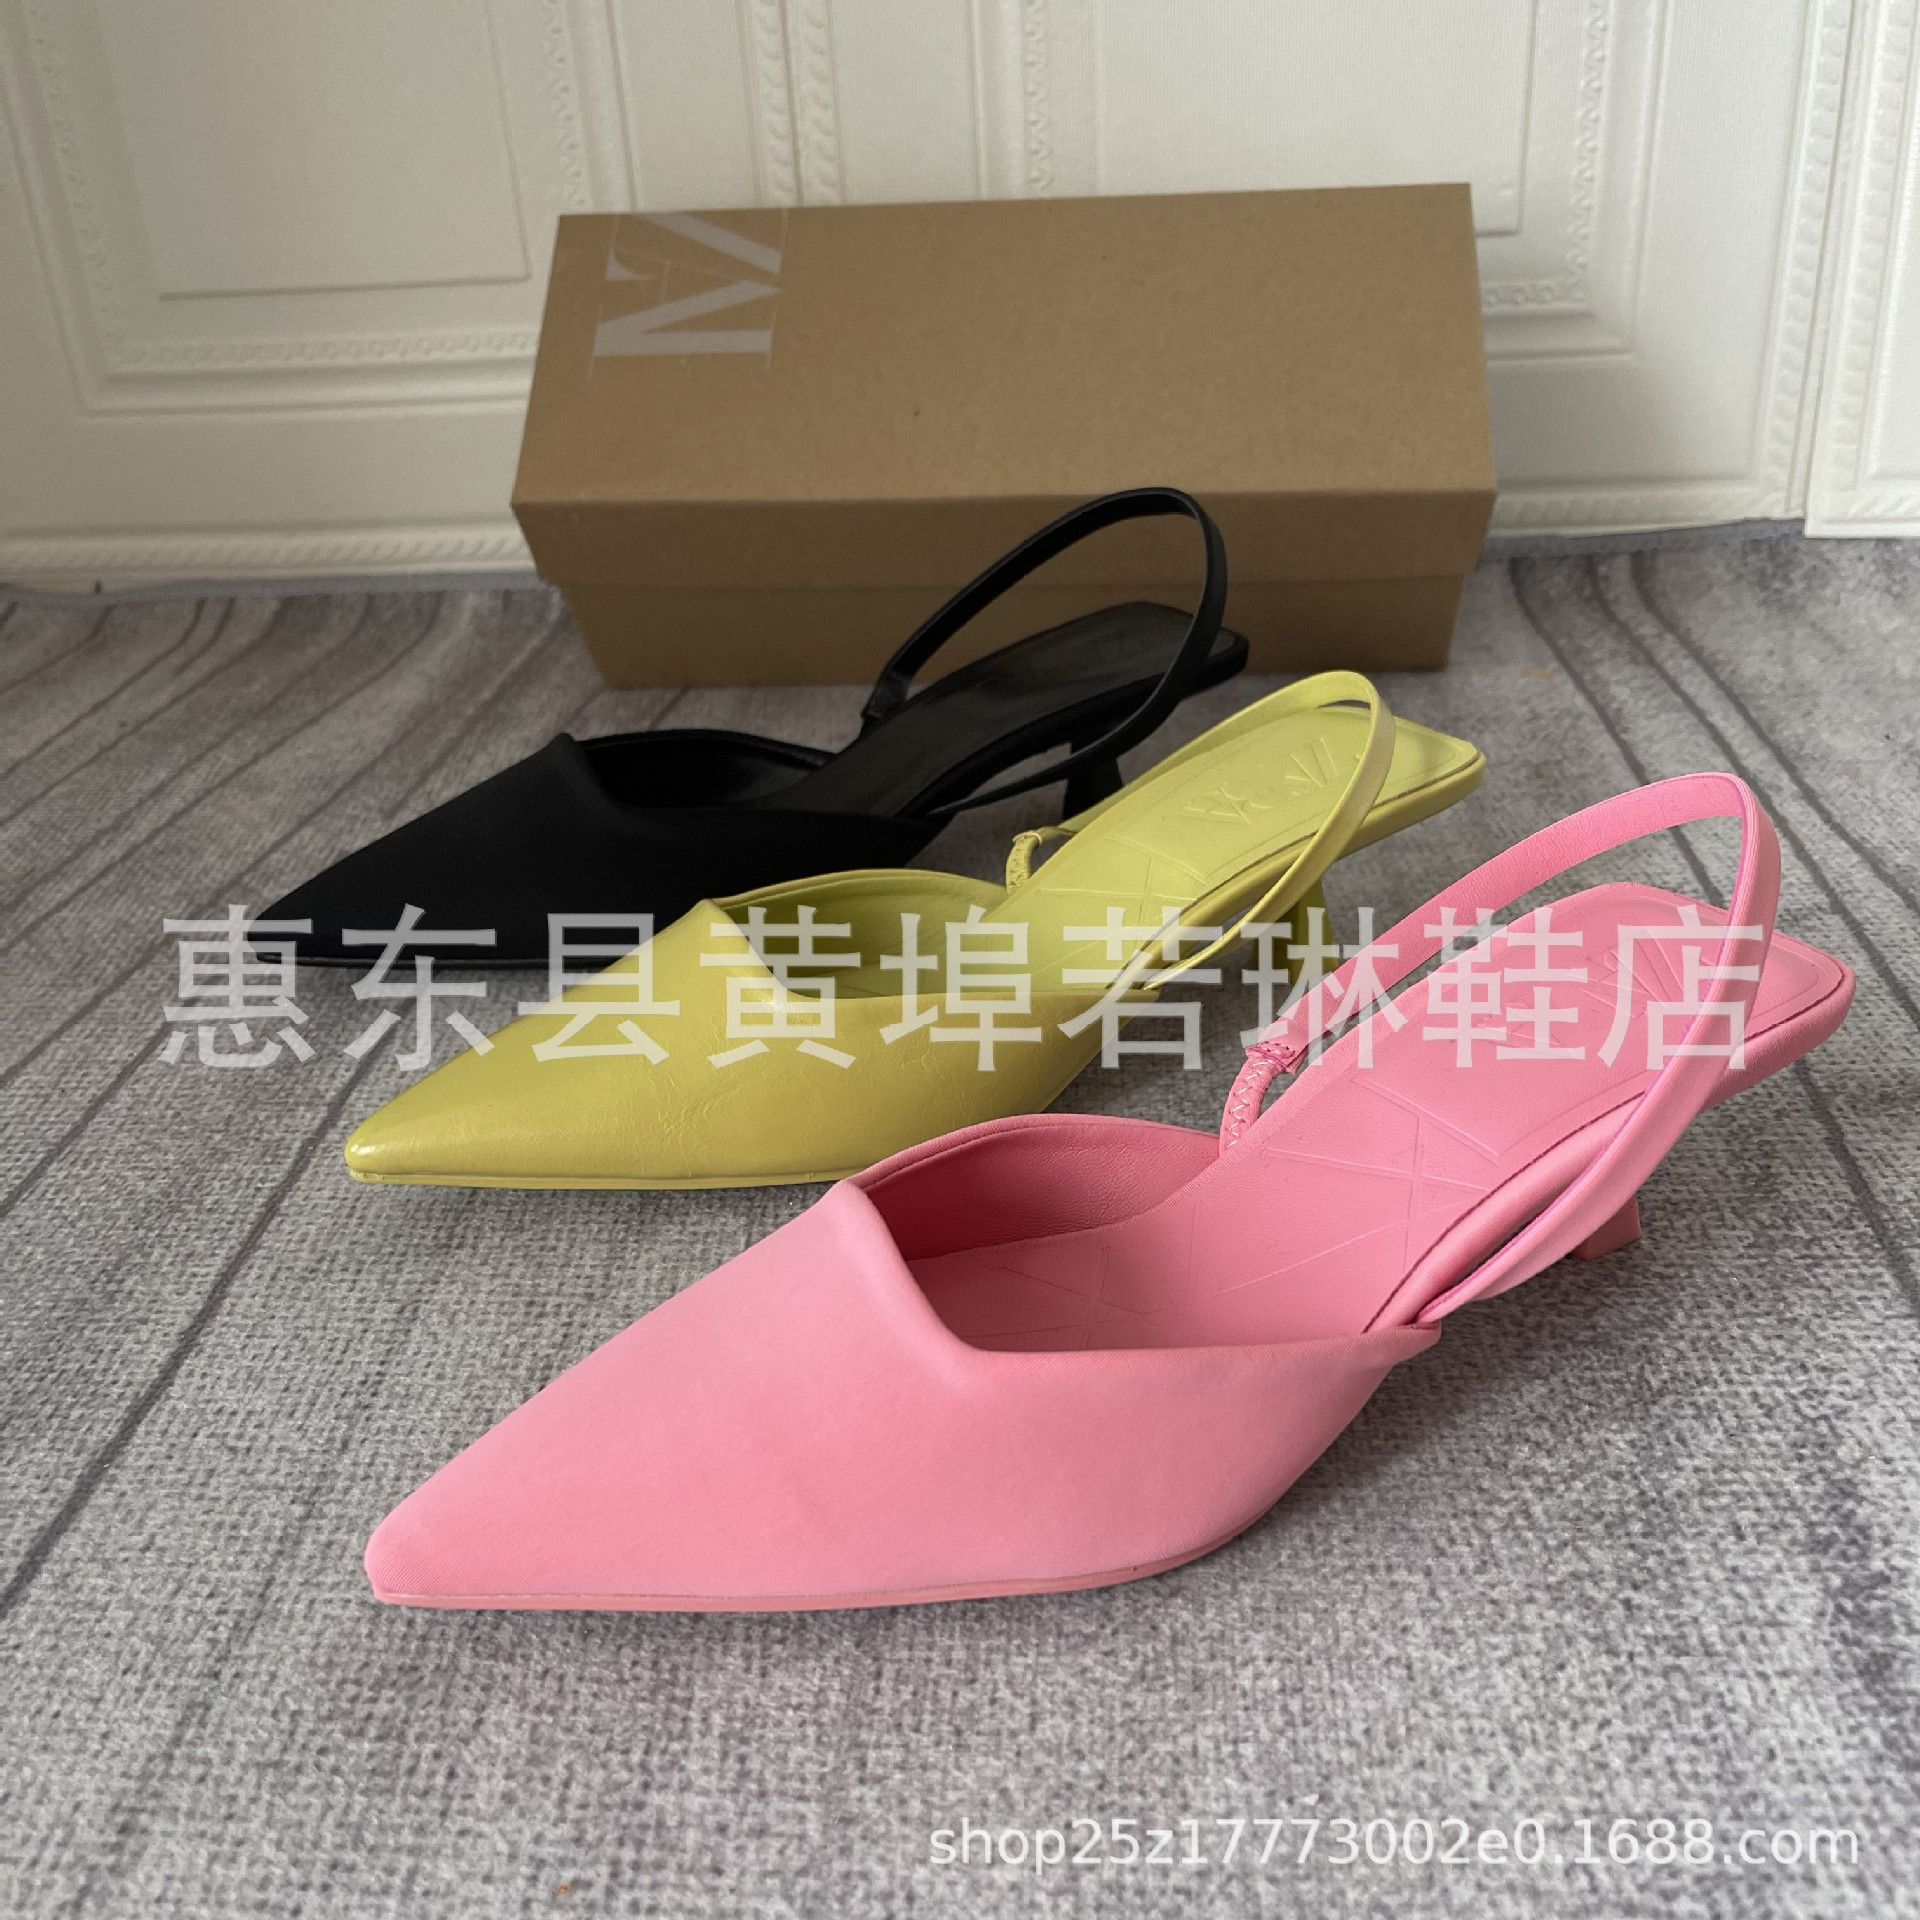 ZA new women's shoes pink slingback high...